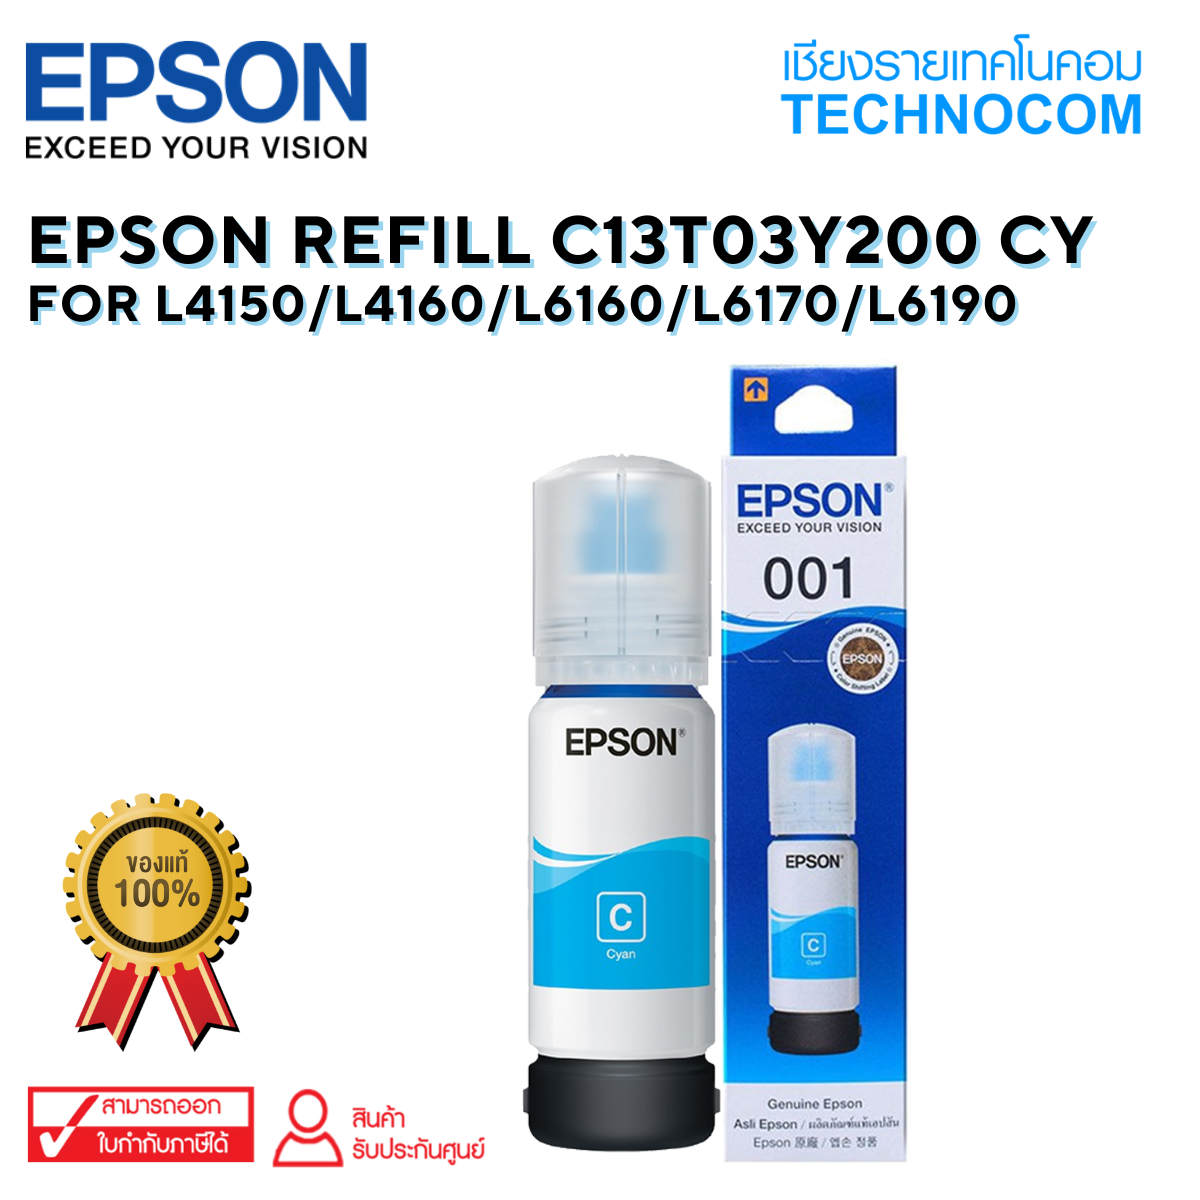 EPSON REFILL C13T03Y200 CY For L4150/L4160/L6160/L6170/L6190